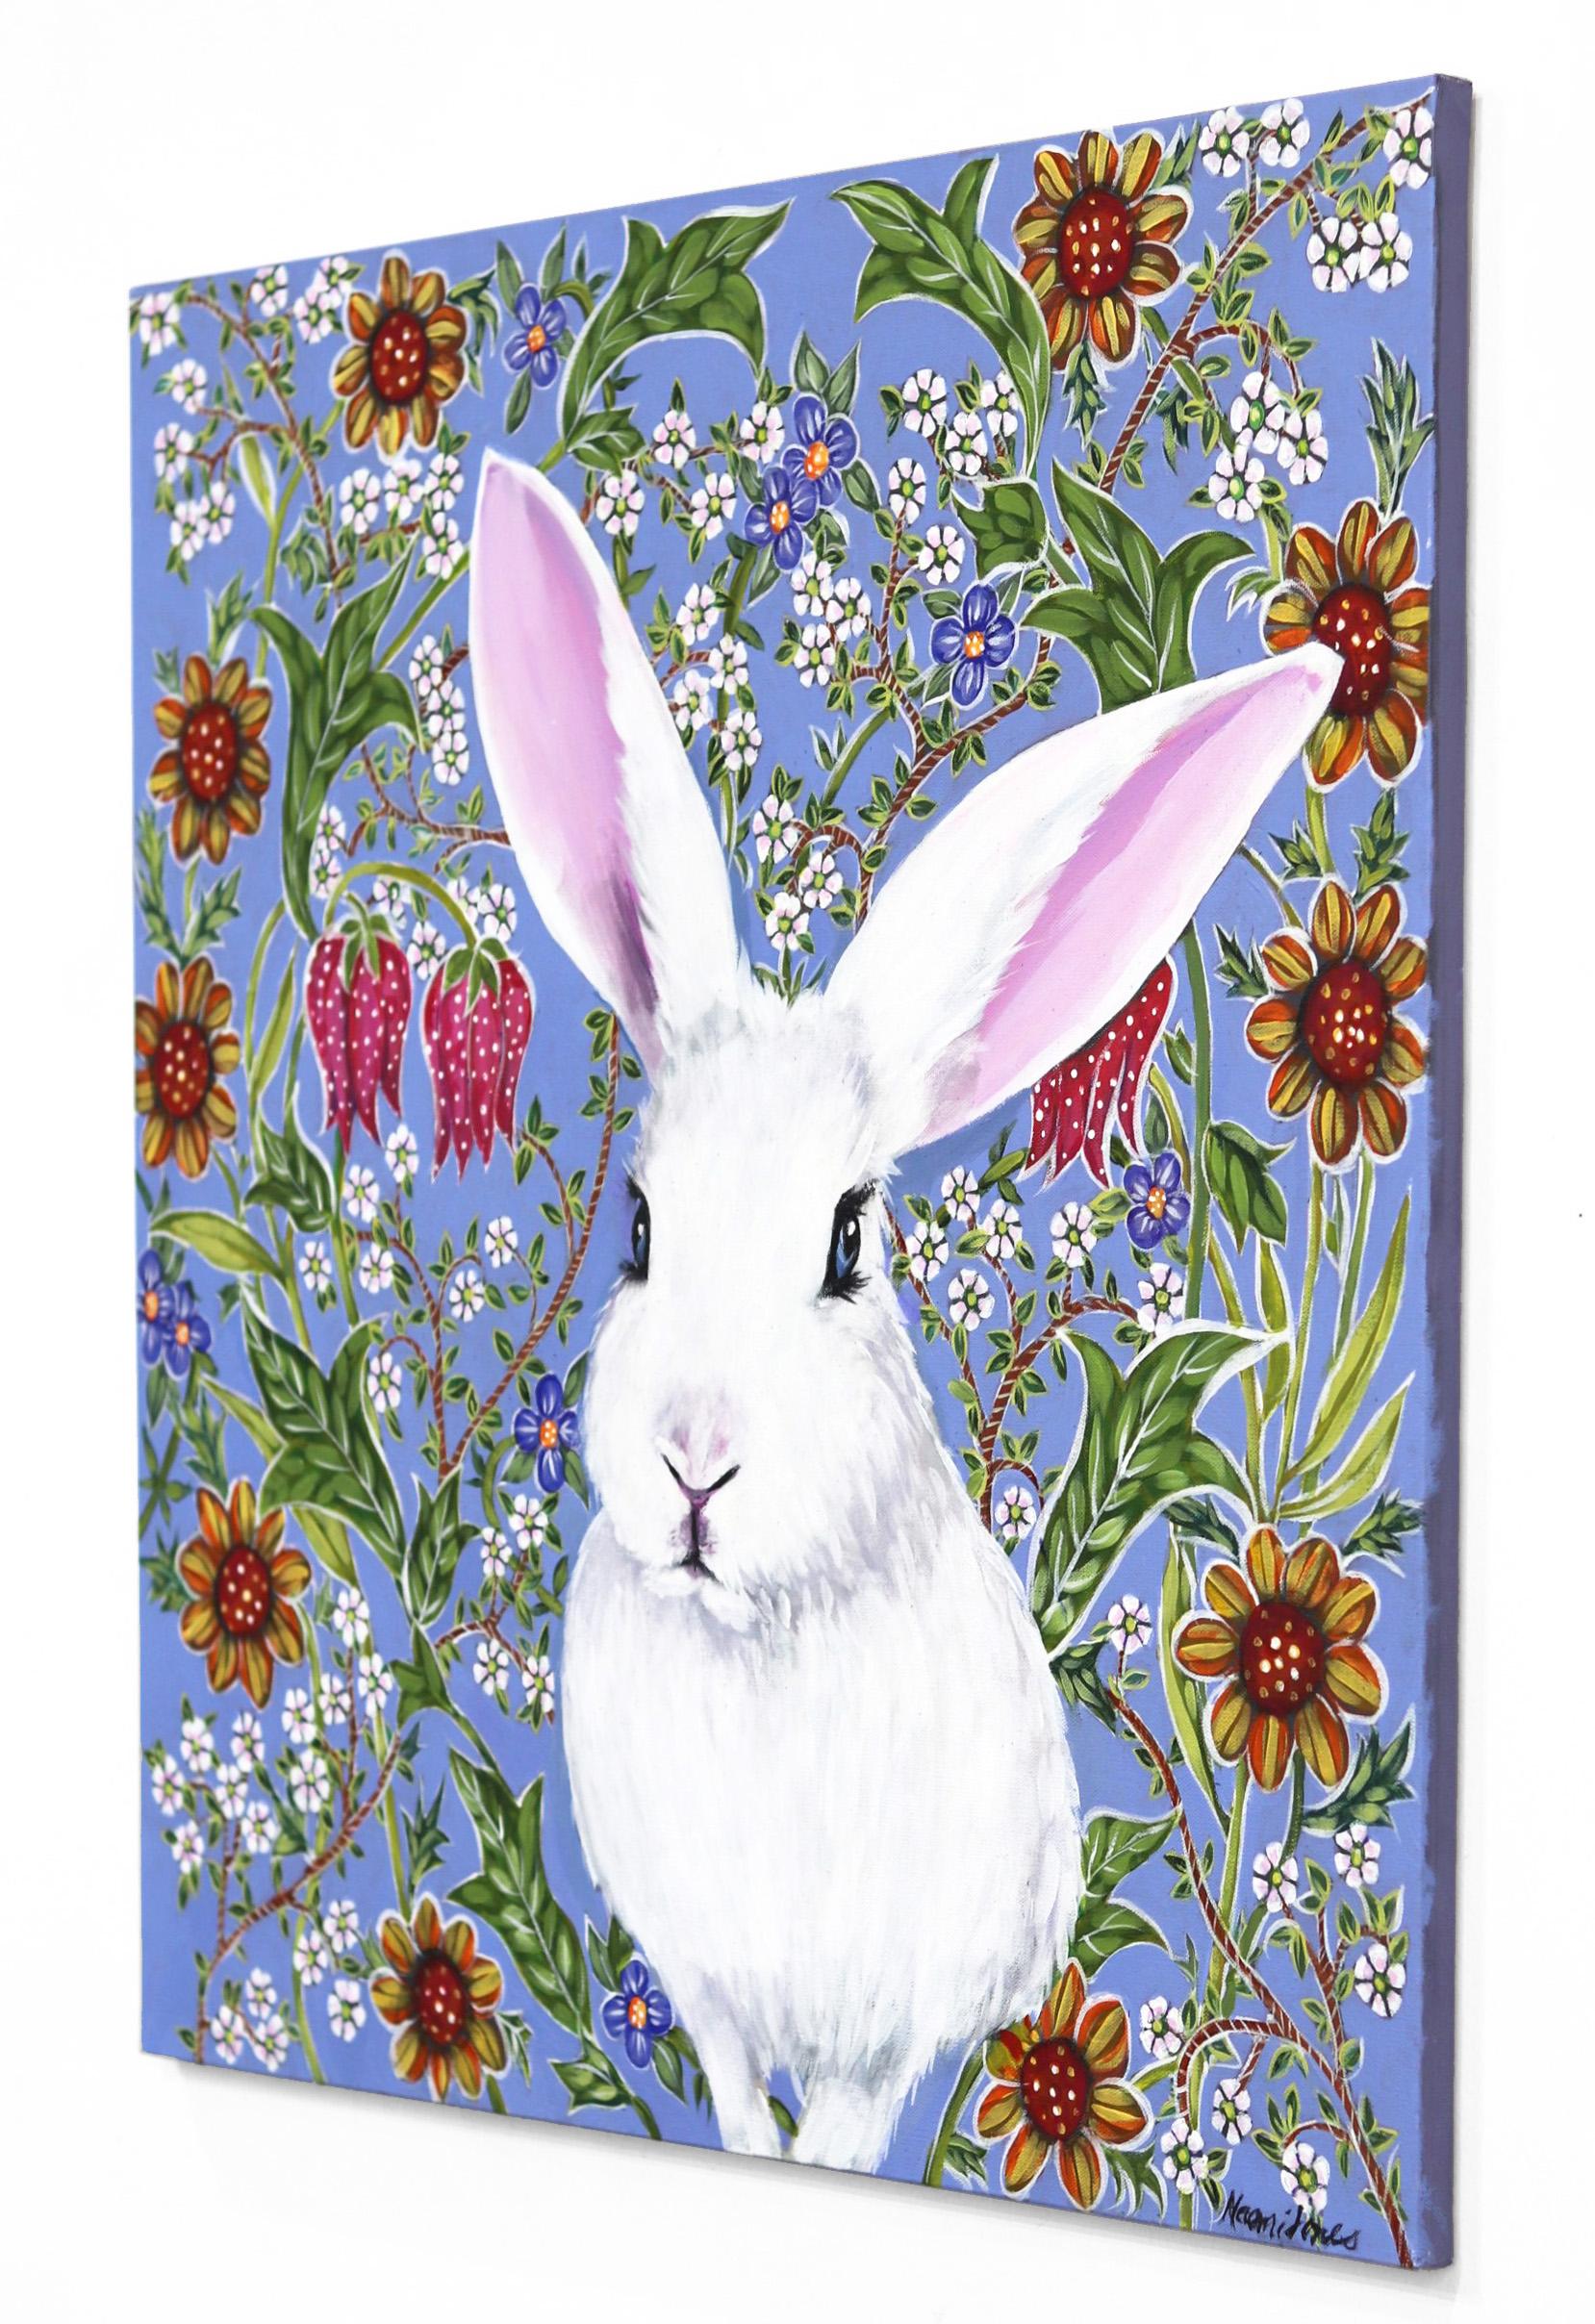 Sweet White Rabbit  - Original Vivid Figurative Animal Painting on Canvas 3